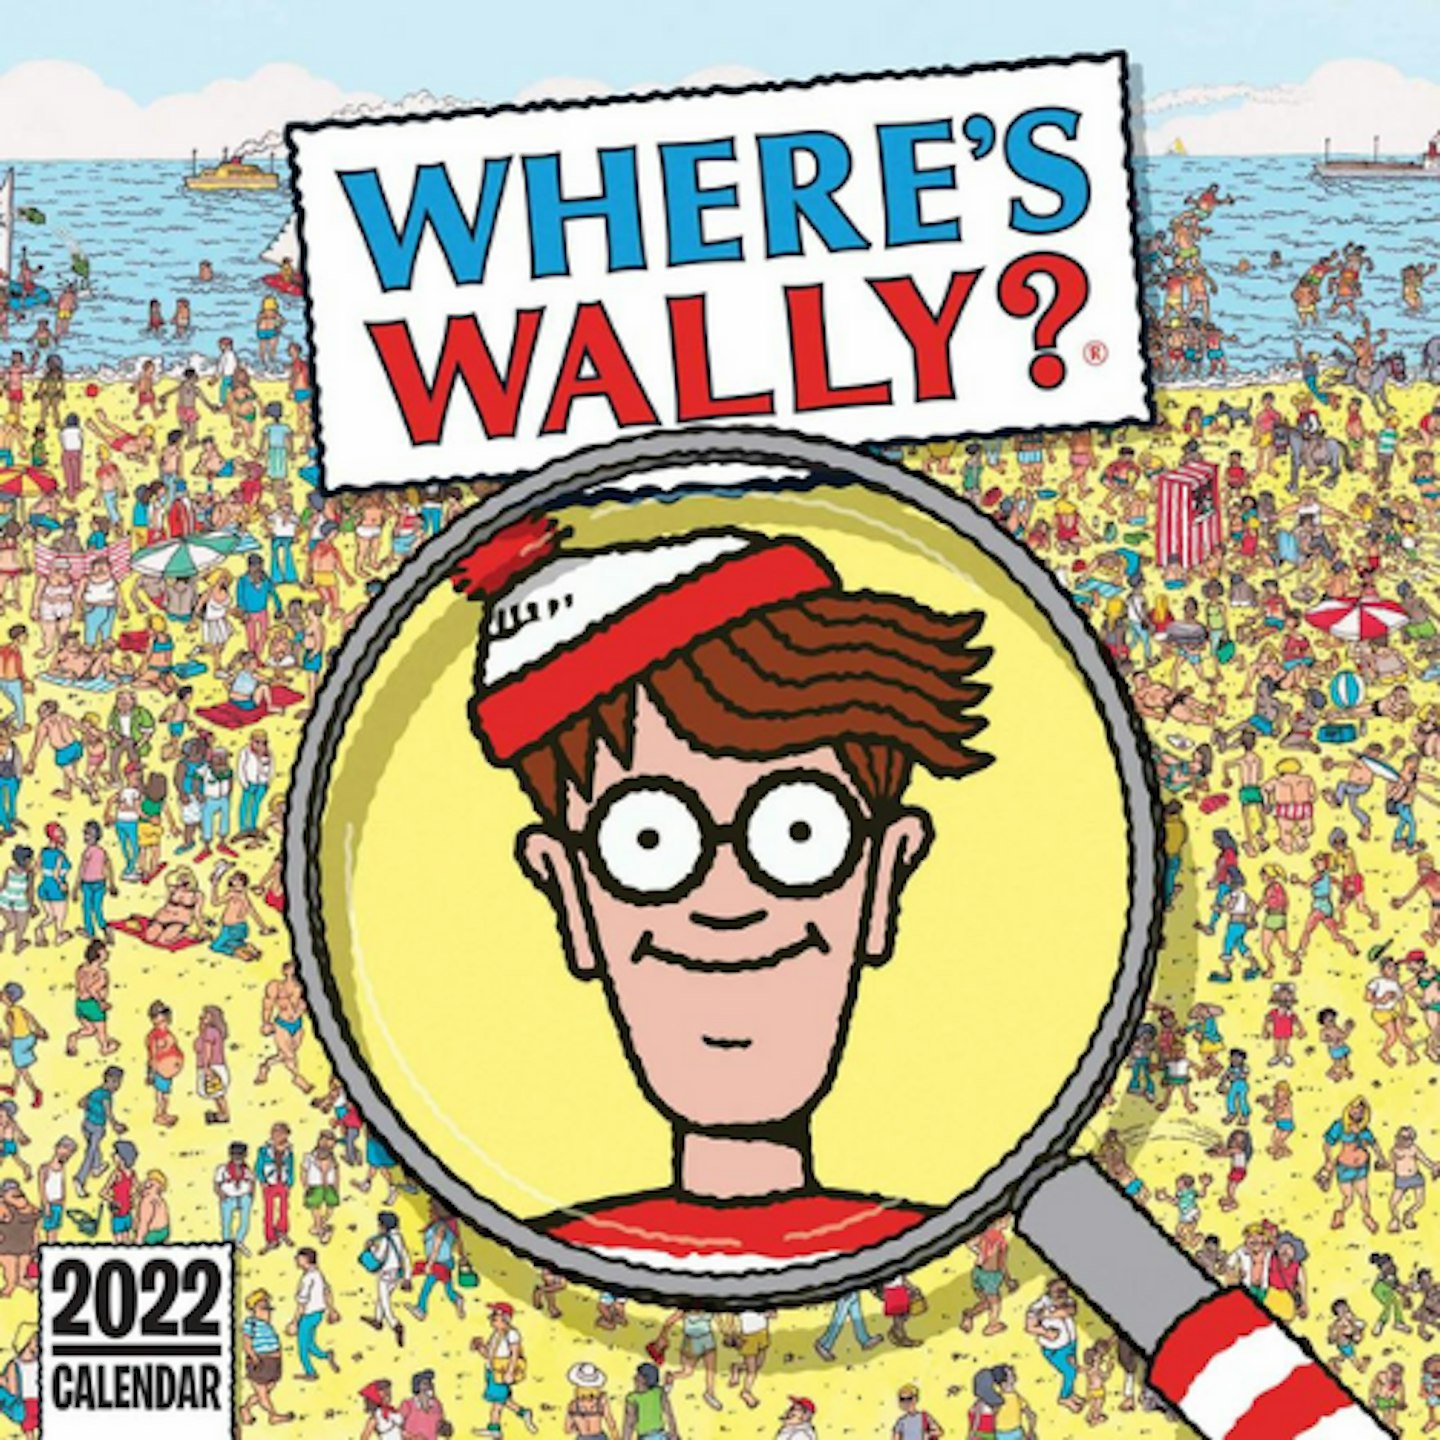 Whereu2019s Wally Calendar 2022